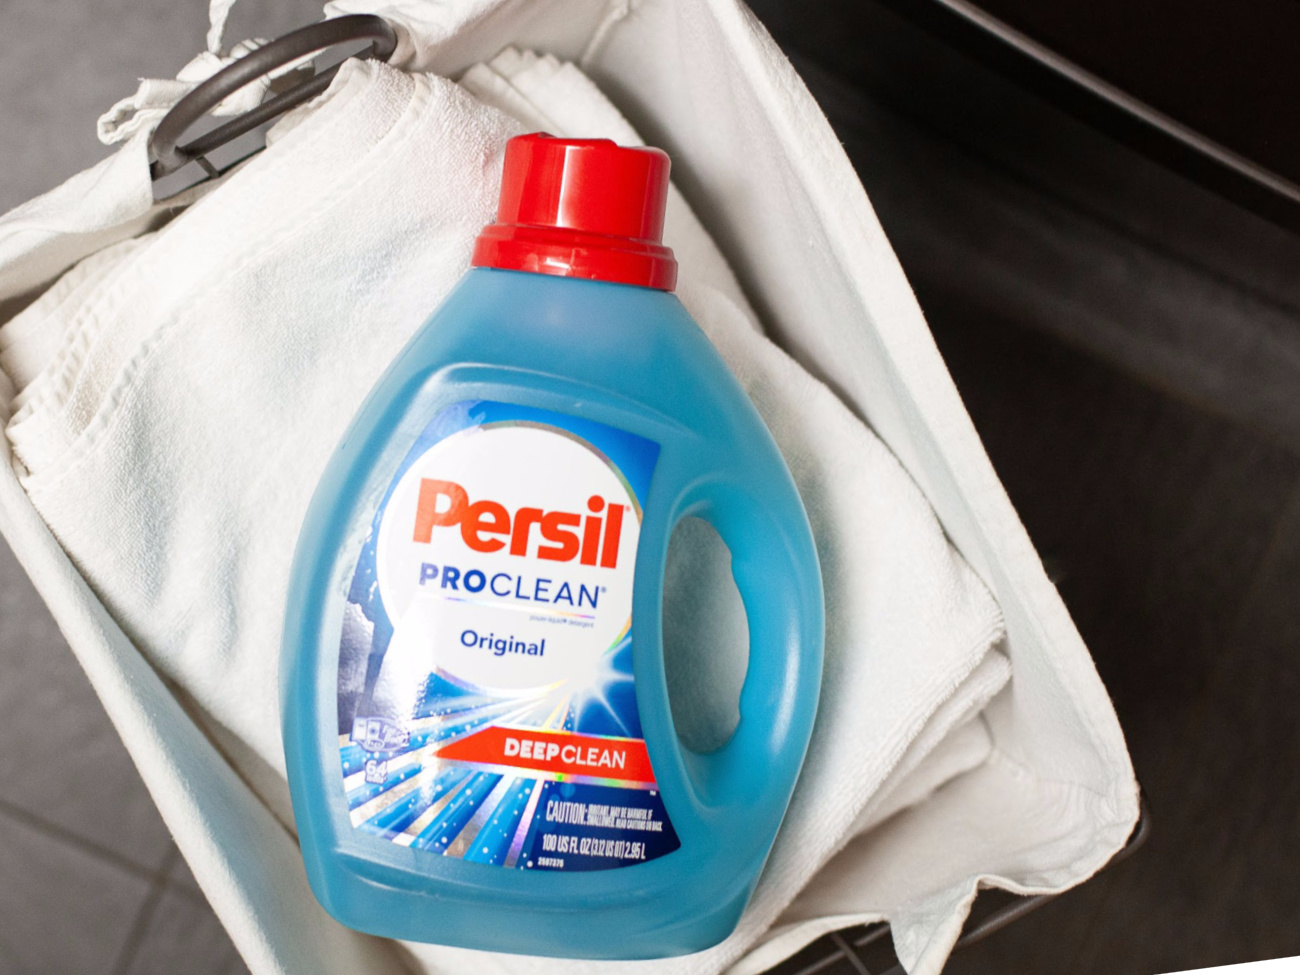 Get Persil Detergent As Low As $9.99 At Publix (Regular Price $14.99)